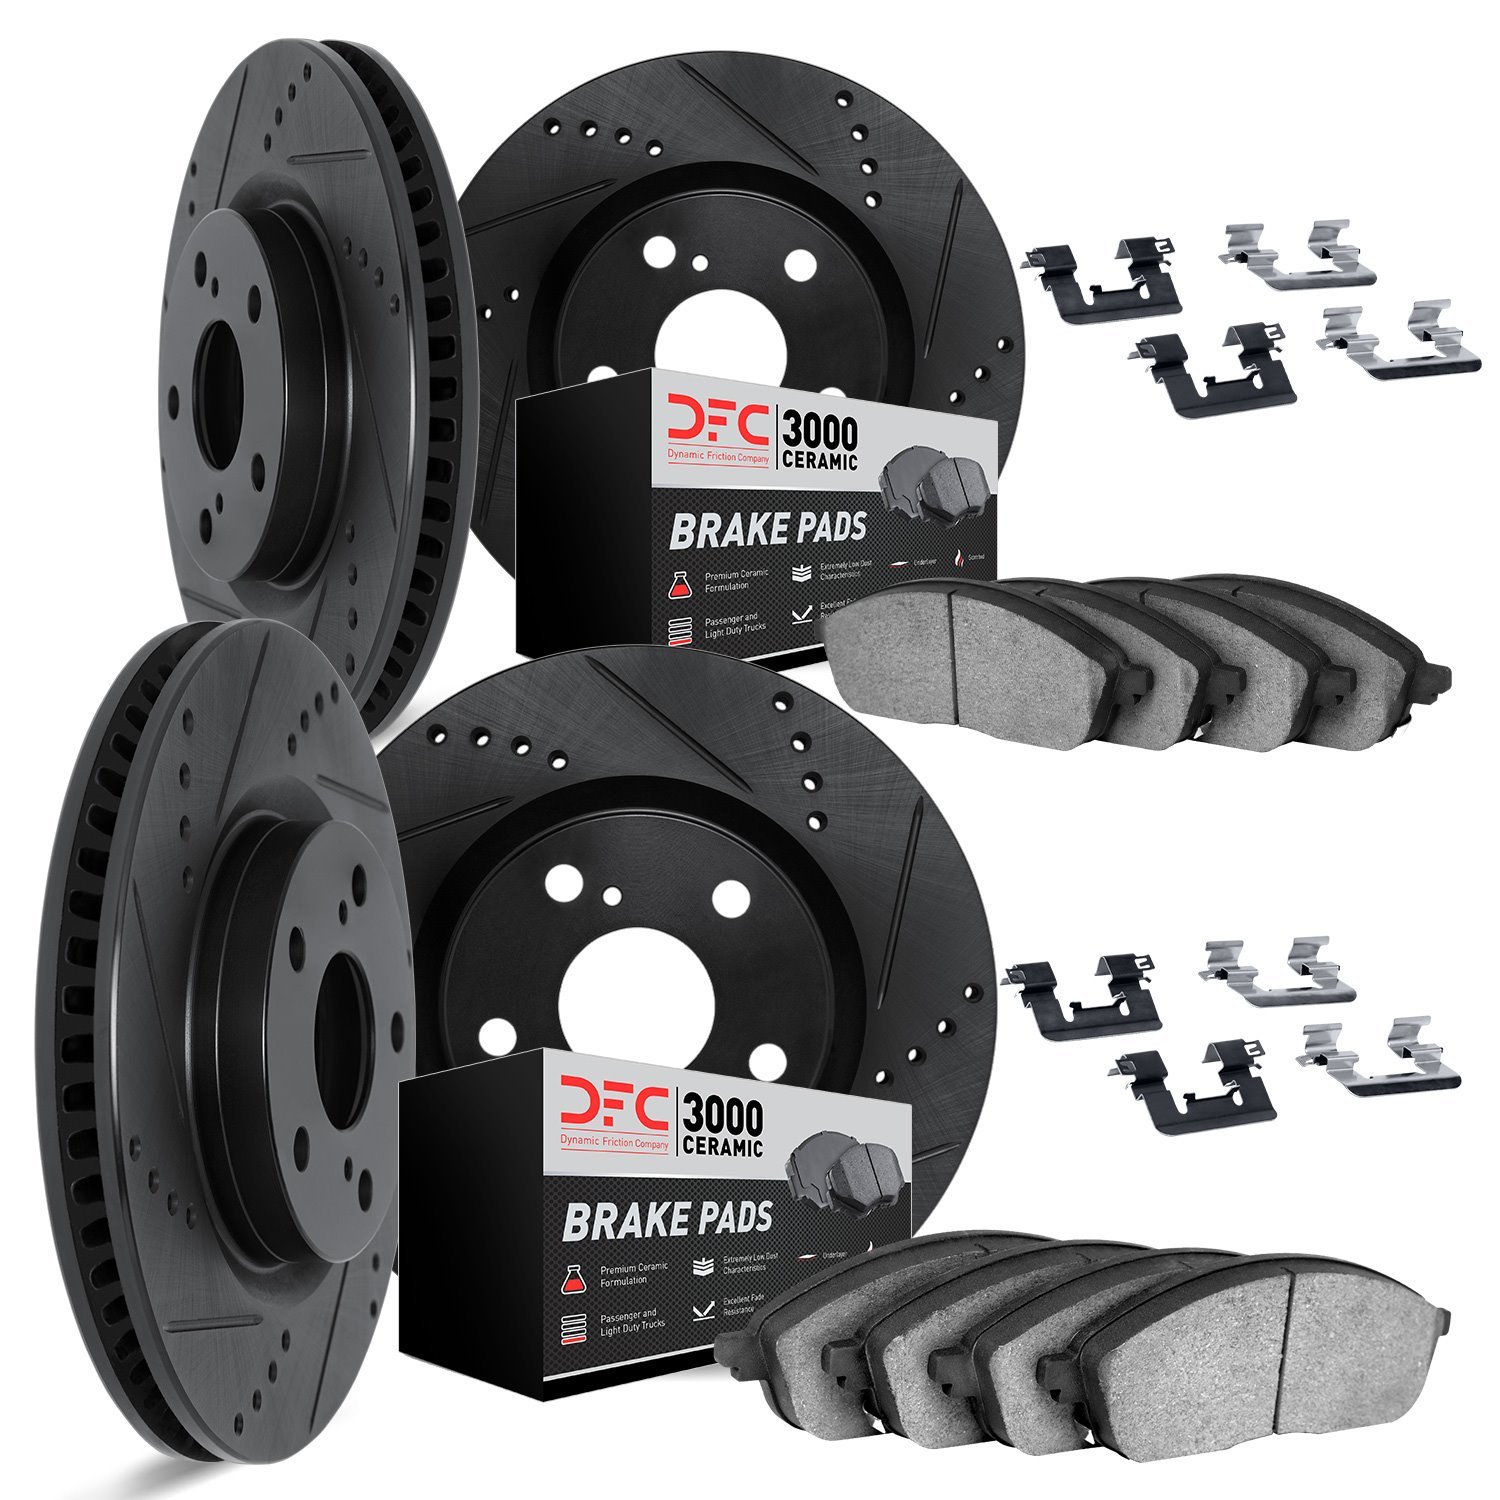 8314-13047 Drilled/Slotted Brake Rotors with 3000-Series Ceramic Brake Pads Kit & Hardware [Black], Fits Select Multiple Makes/M